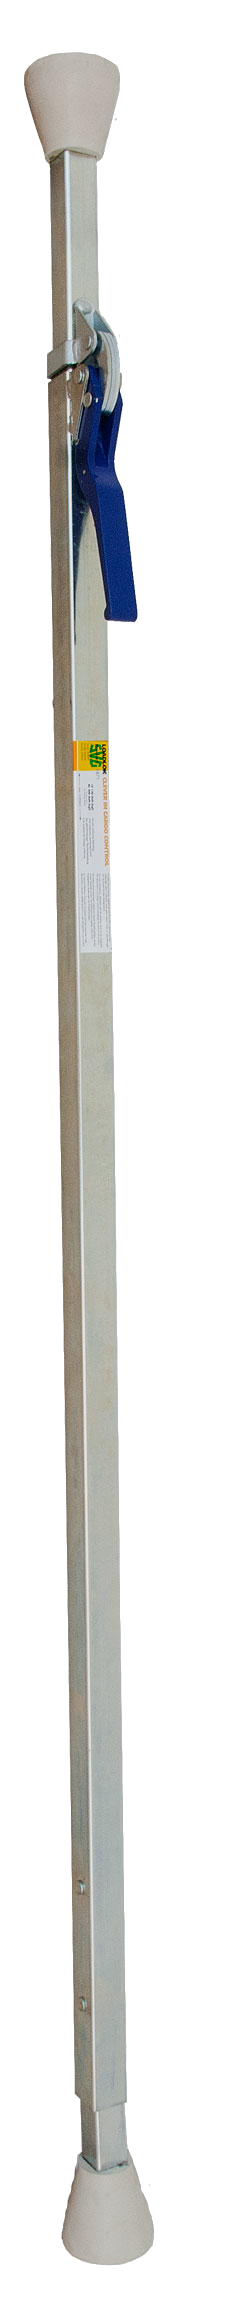 Klemmbalken Stahl vierkant Länge 1880-2850 mm